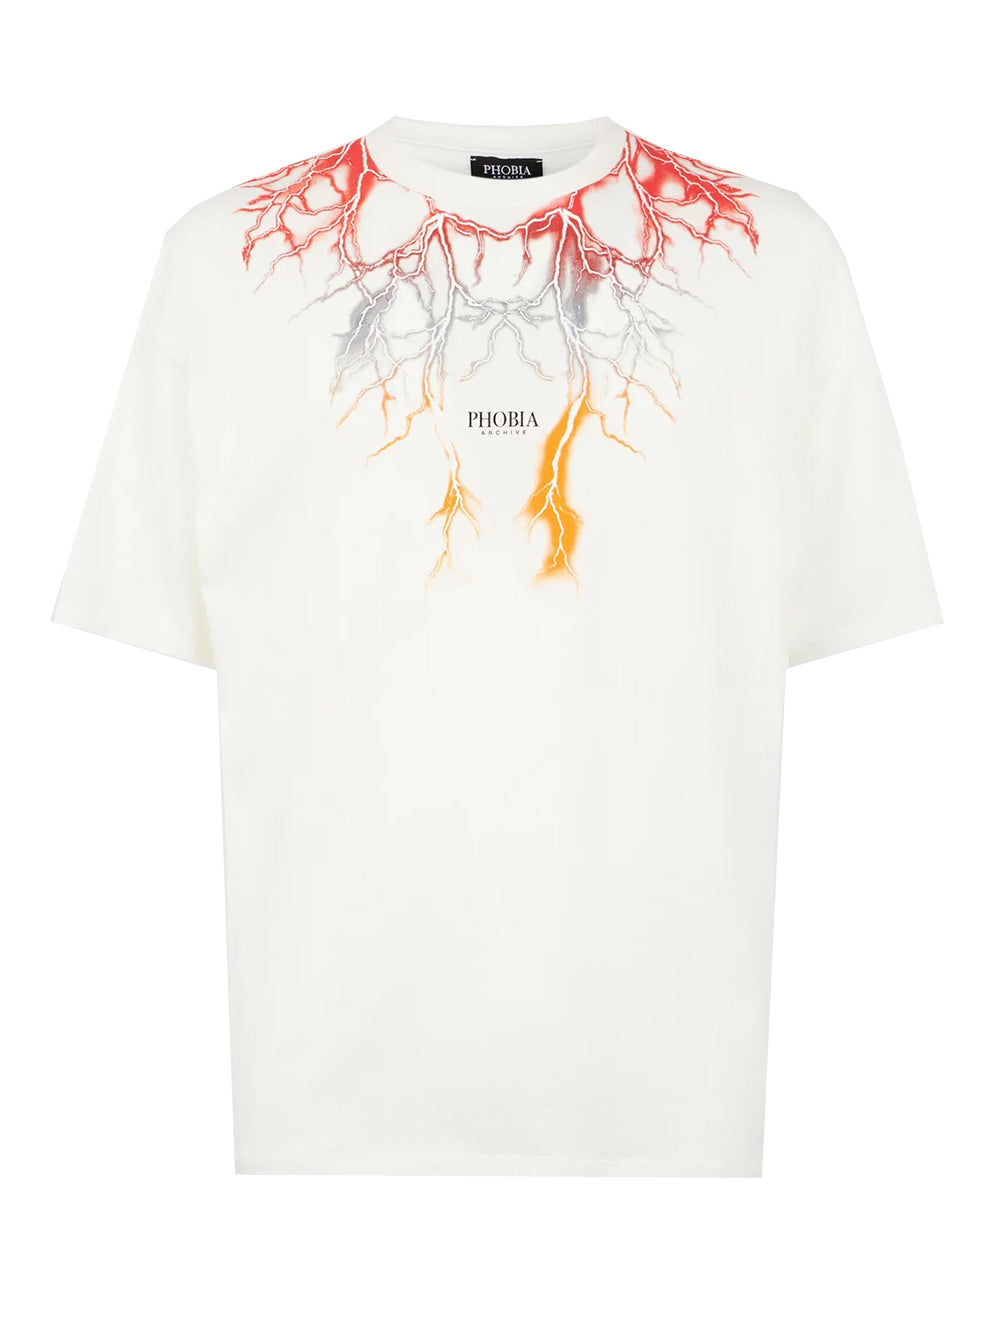 T-shirt PHOBIA Uomo PH00109 White Red Grey Orange lightning